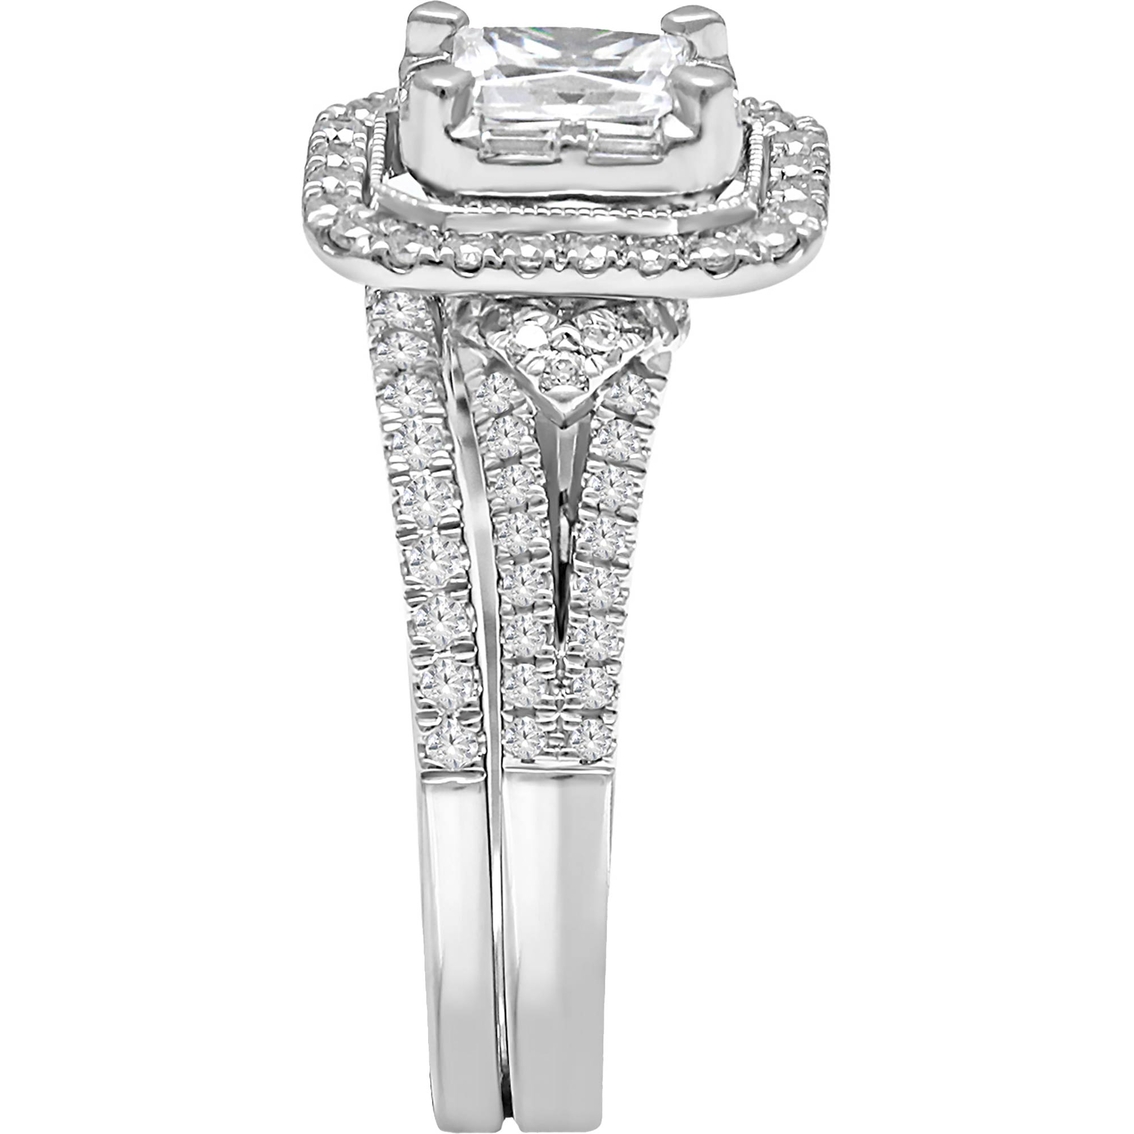 American Rose 14K White Gold 1 1/4 CTW Emerald Cut Diamond Bridal Set - Image 2 of 3